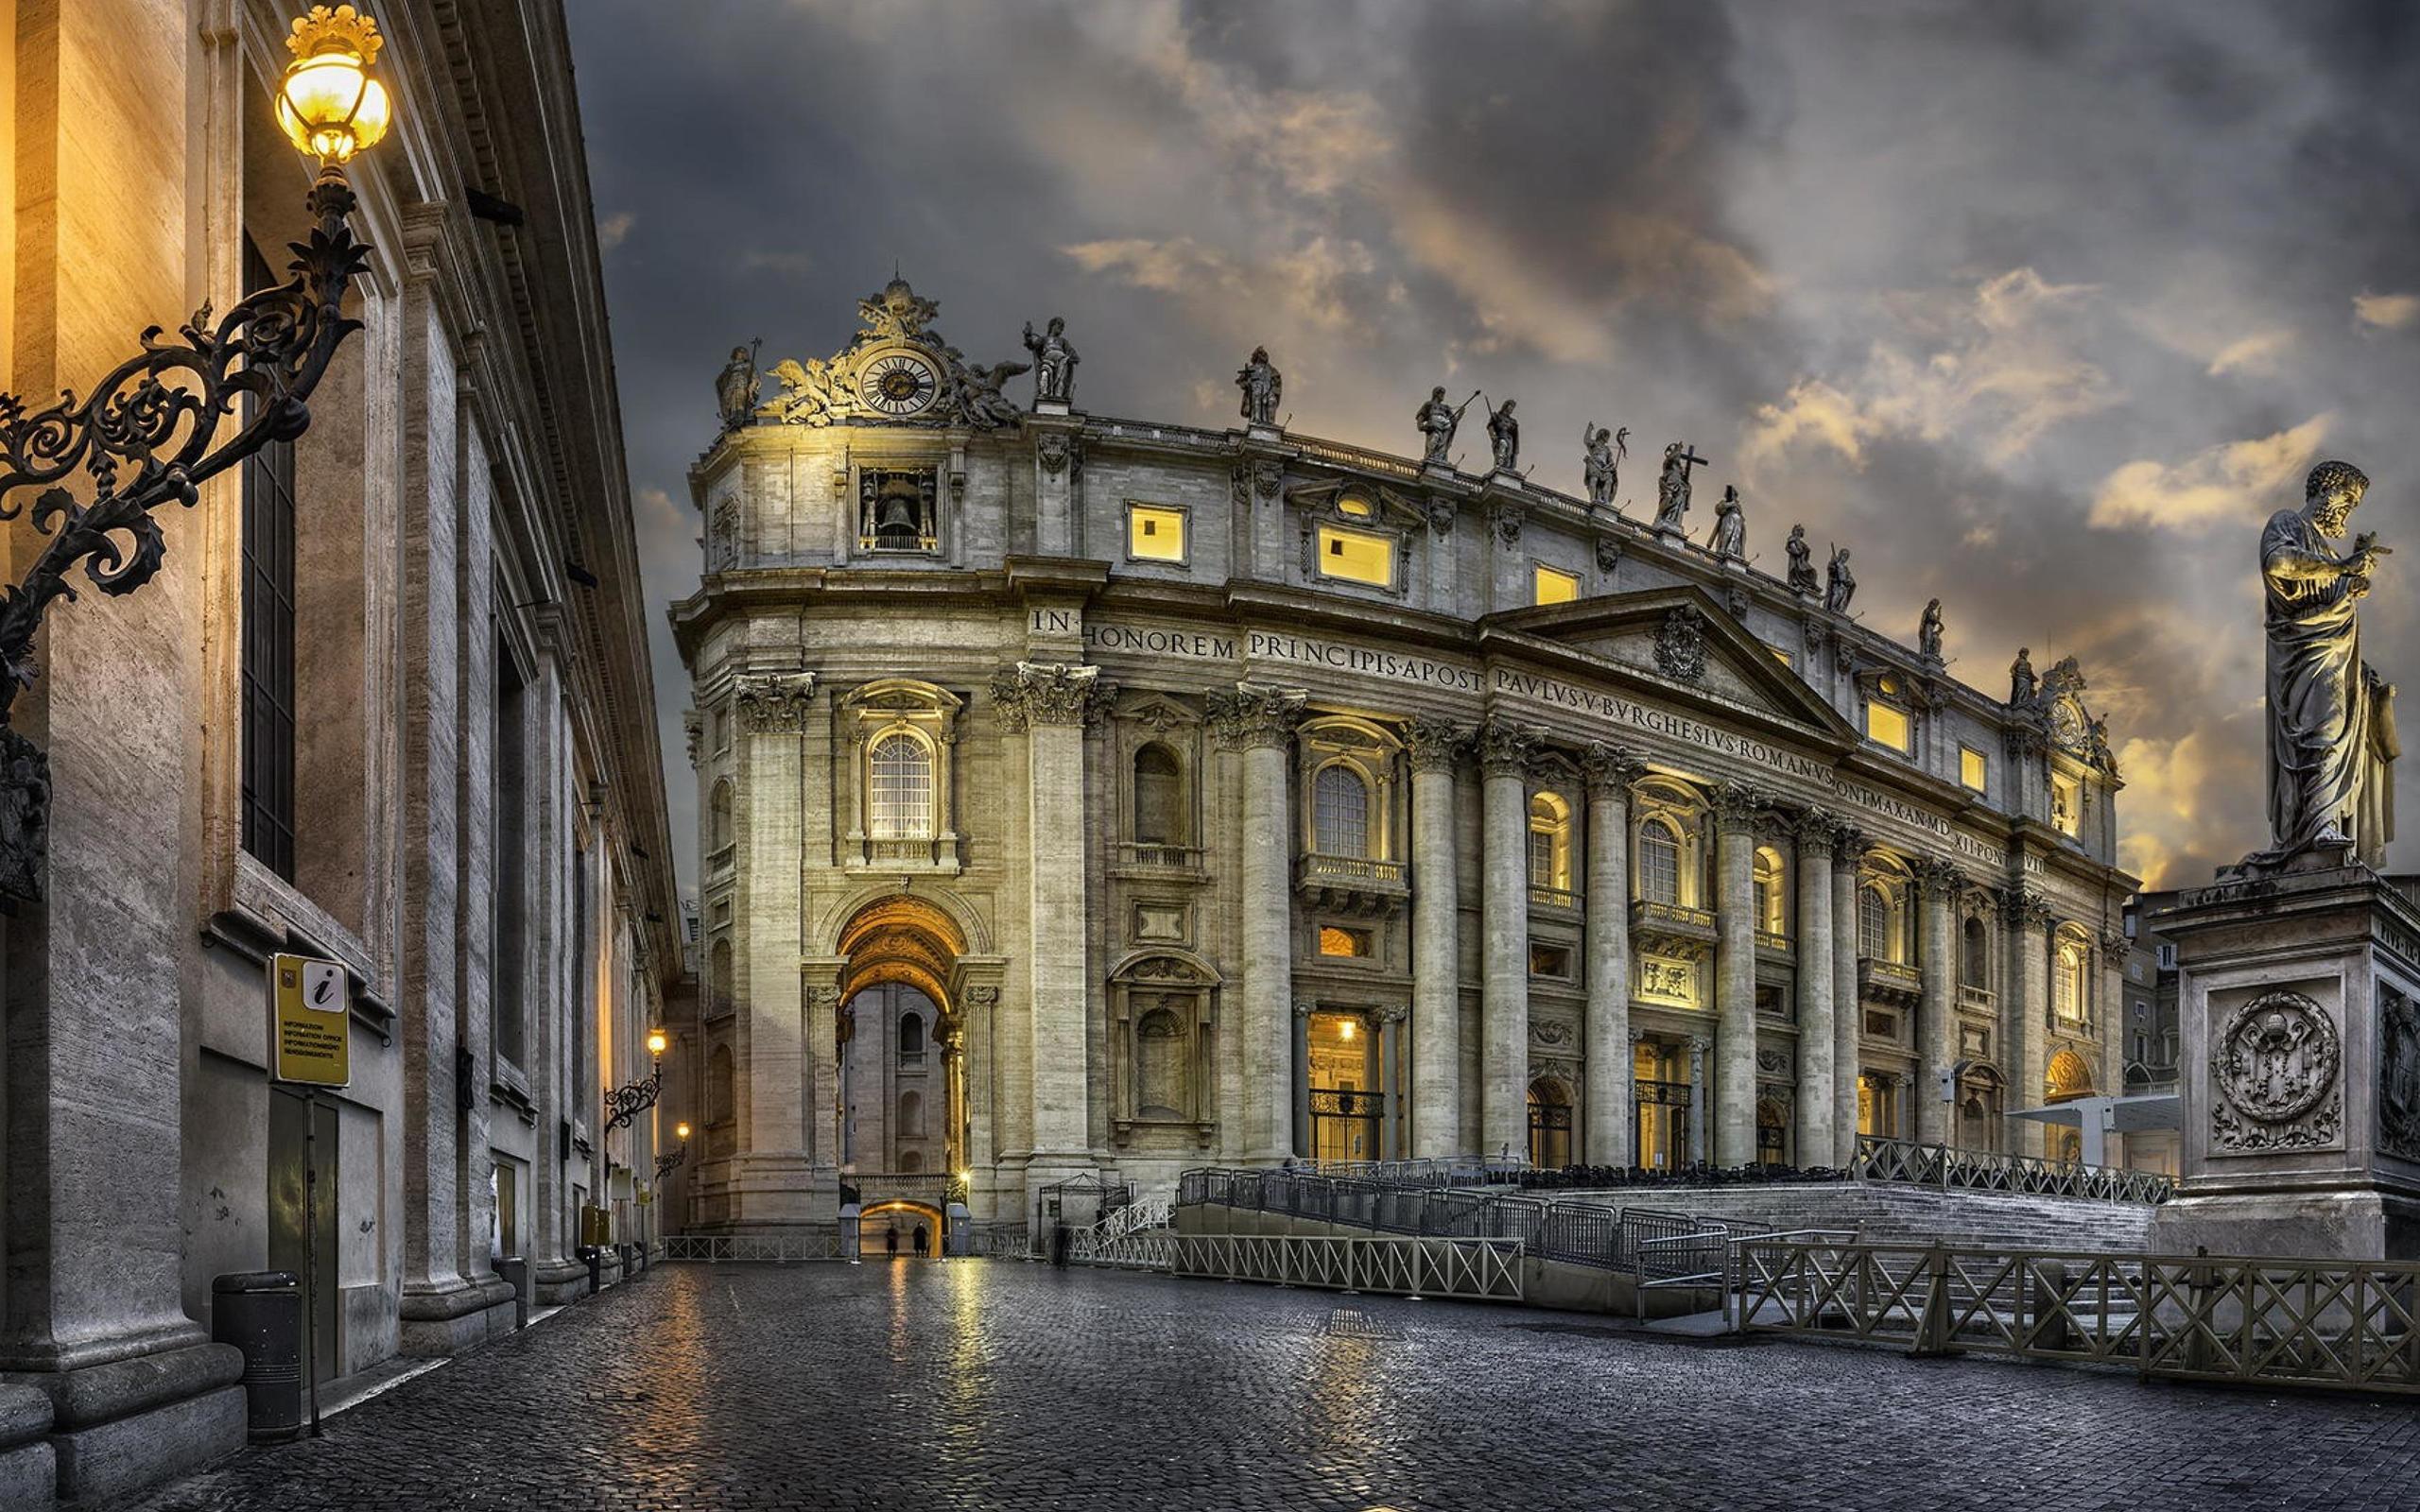 Saint Peter's Square (Vatican City) 4K UltraHD Wallpaper. Wallpaper